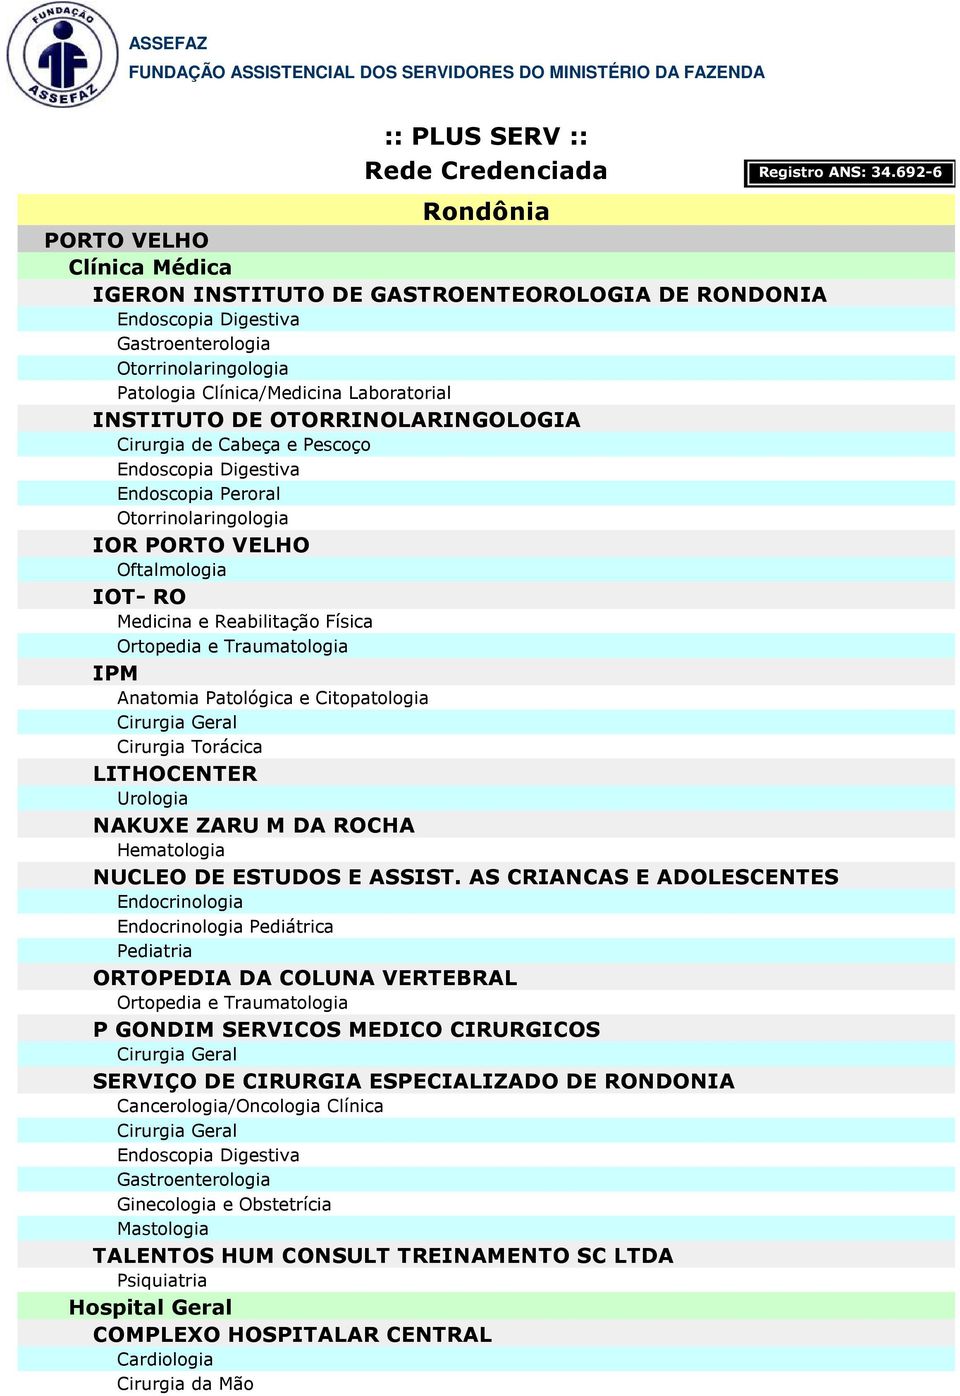 AS CRIANCAS E ADOLESCENTES Endocrinologia Endocrinologia Pediátrica ORTOPEDIA DA COLUNA VERTEBRAL P GONDIM SERVICOS MEDICO